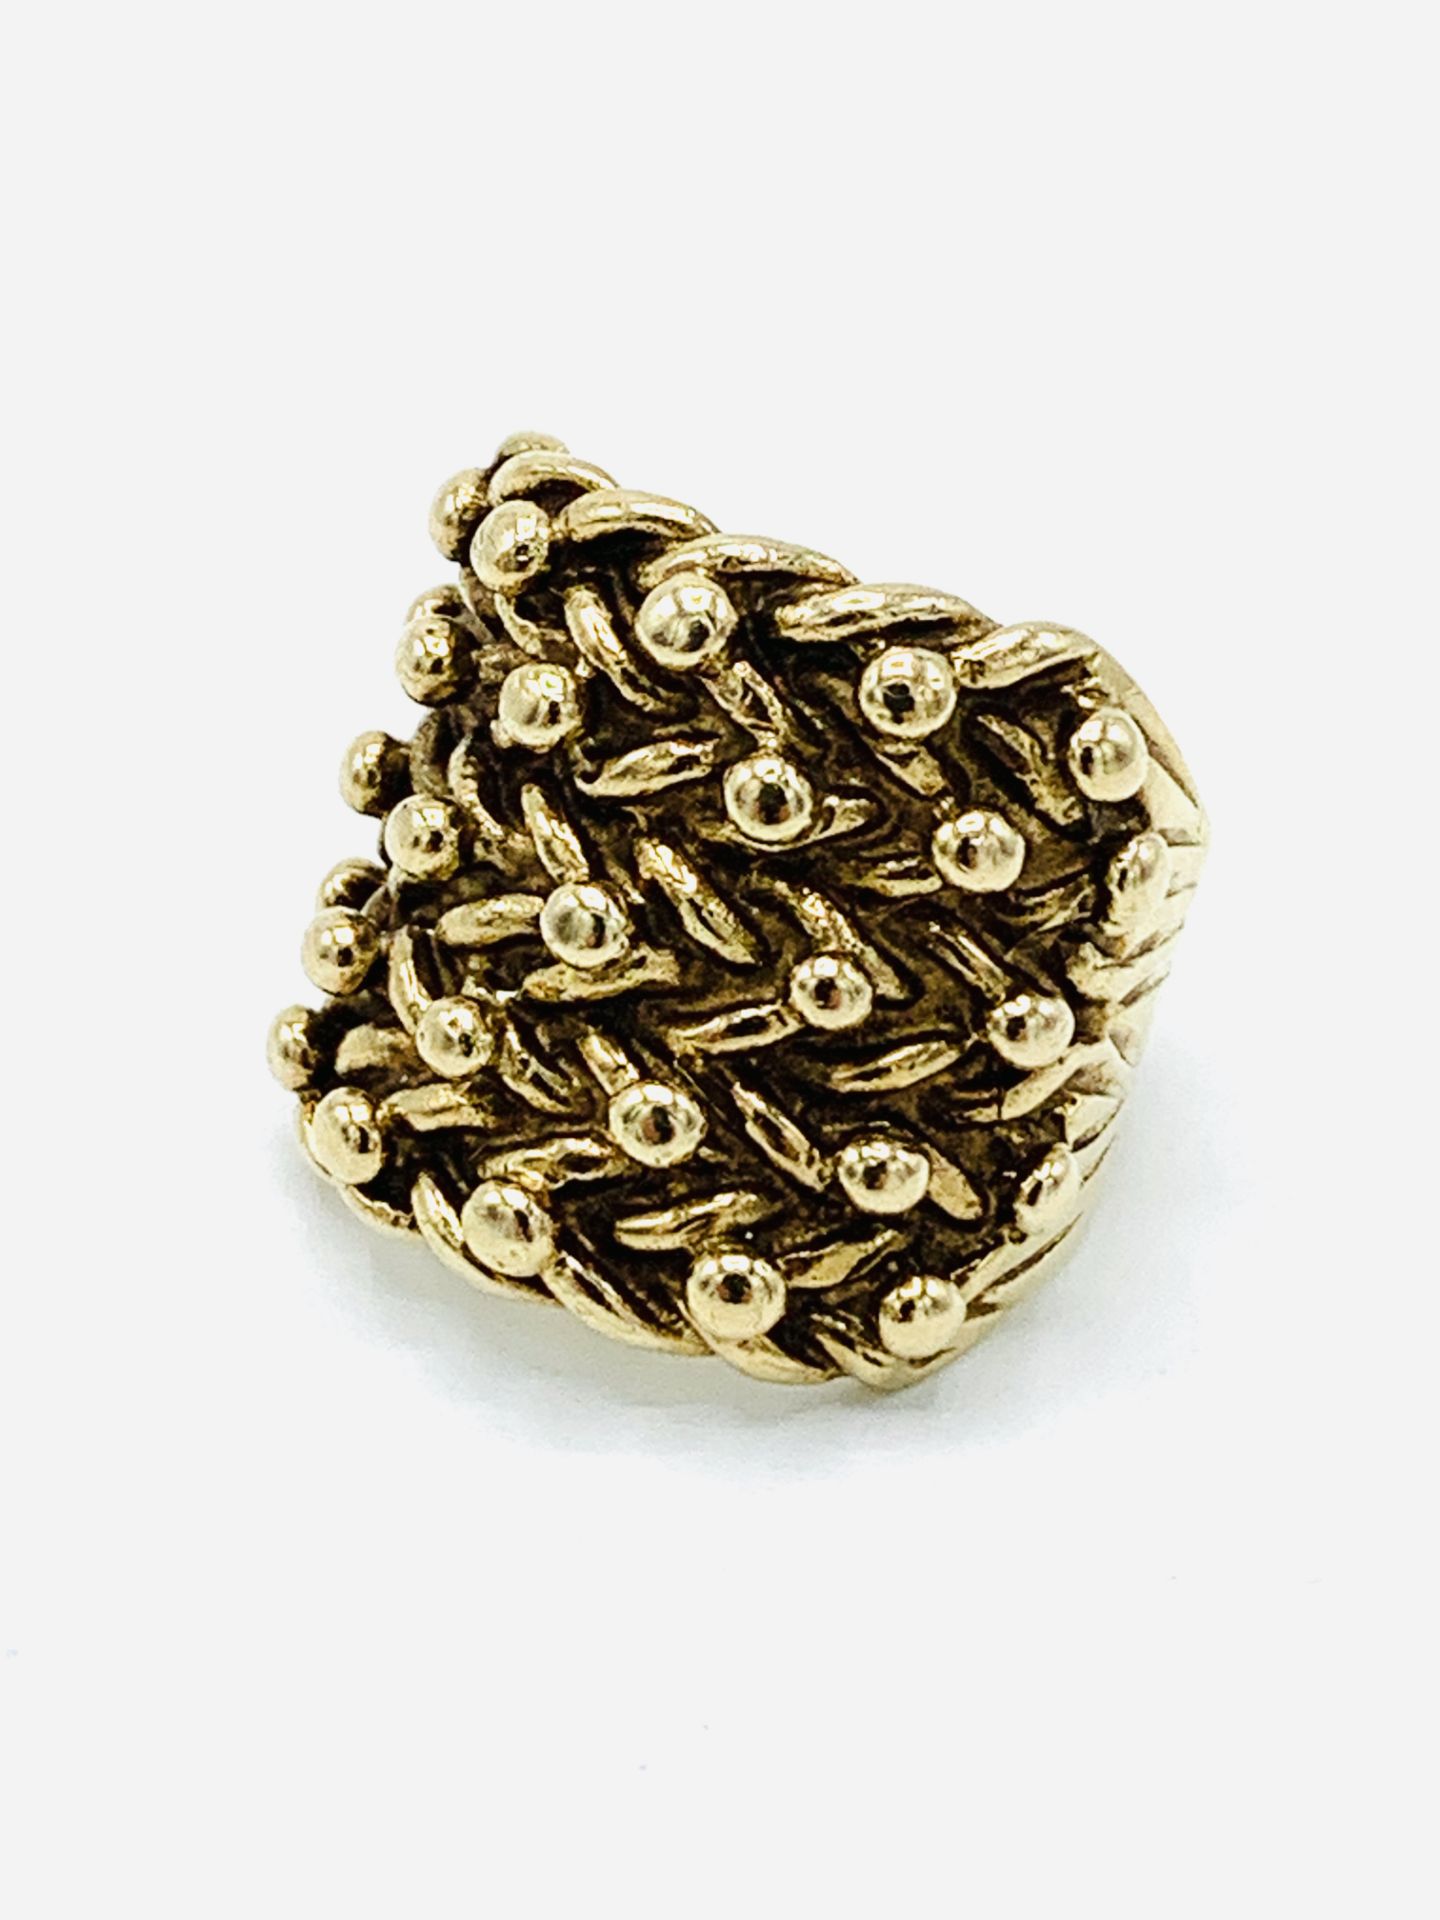 9ct gold 'gypsy' ring.